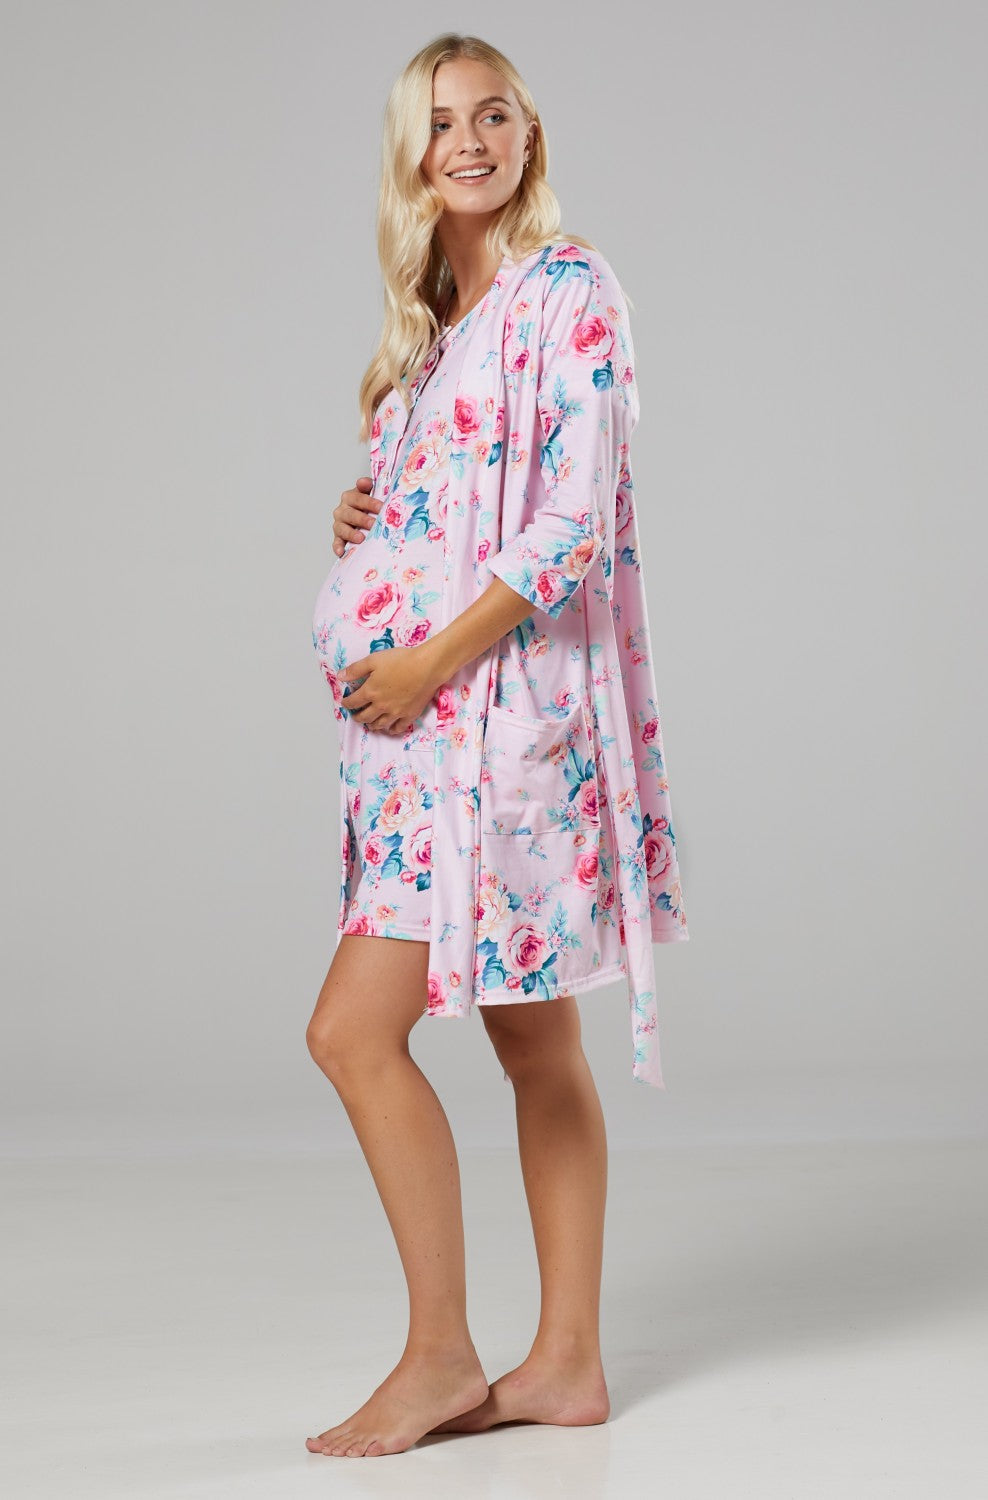 Snapklik.com : Women Maternity Nursing Gown And Robe Set 3 In 1 Labor  Delivery Nursing Nightgown For Breastfeeding Hospital Bathrobe